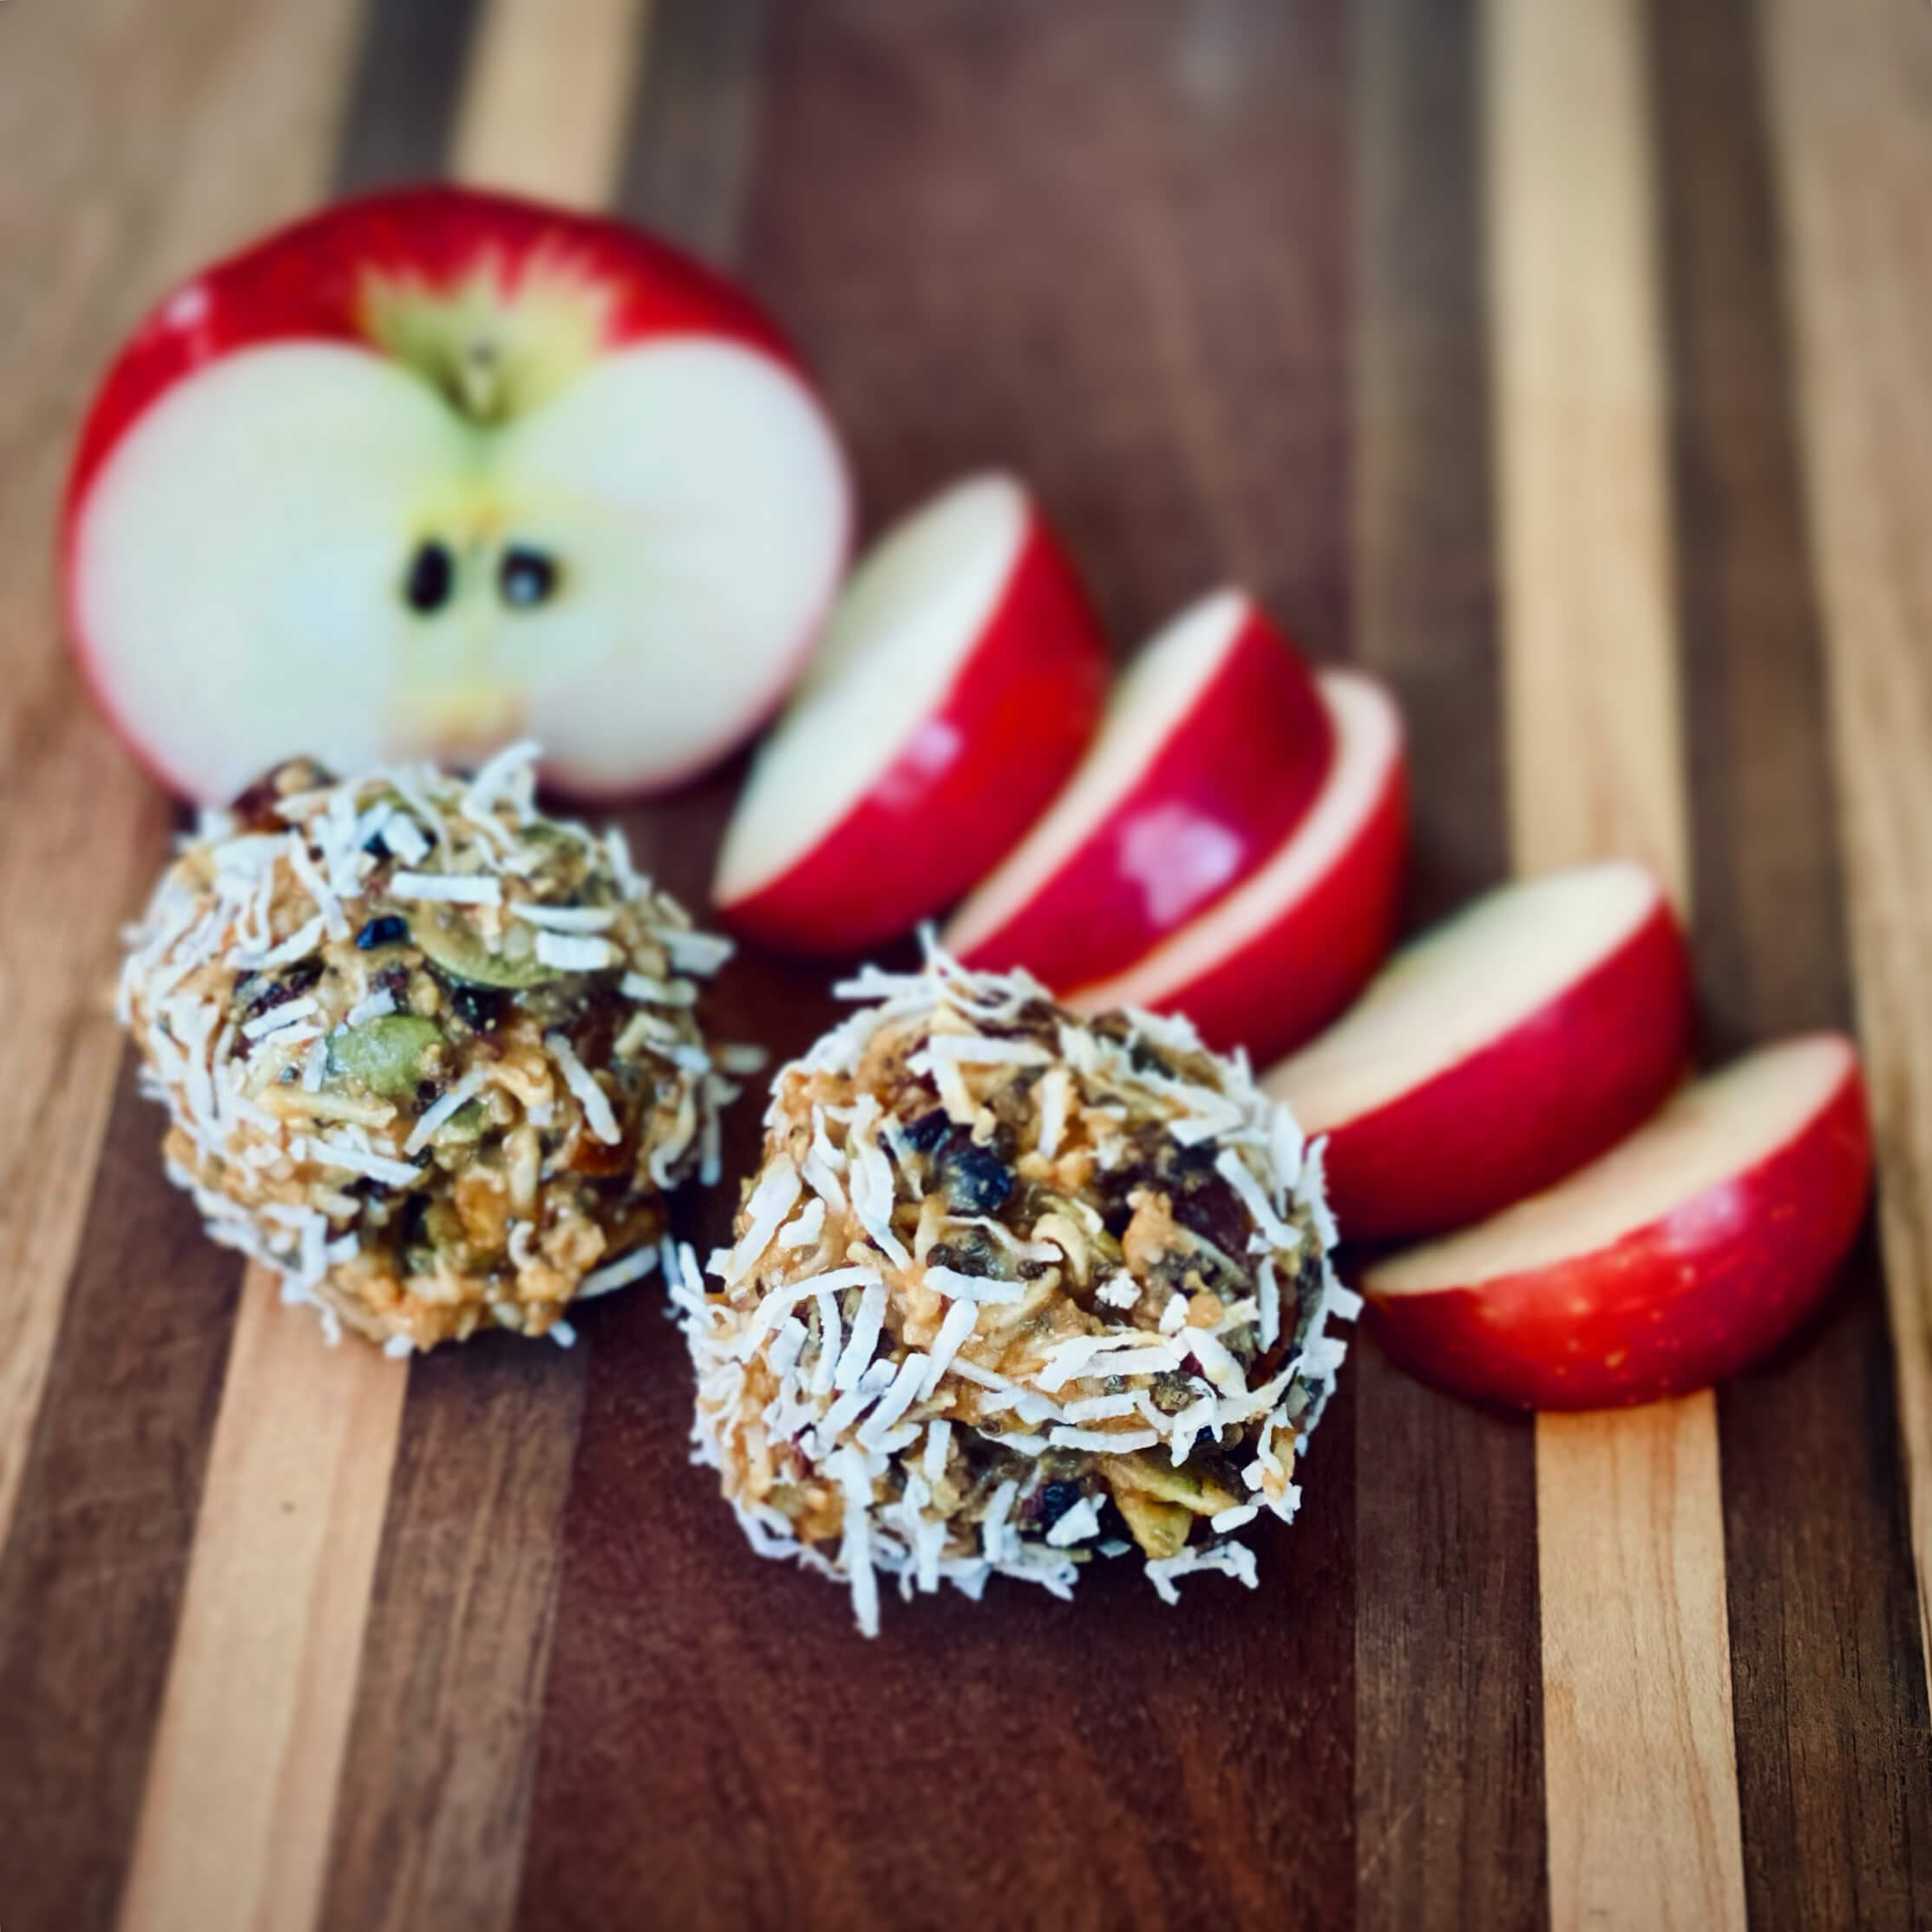 Rockit Apples - Perfect Mini Snack Sized Apples